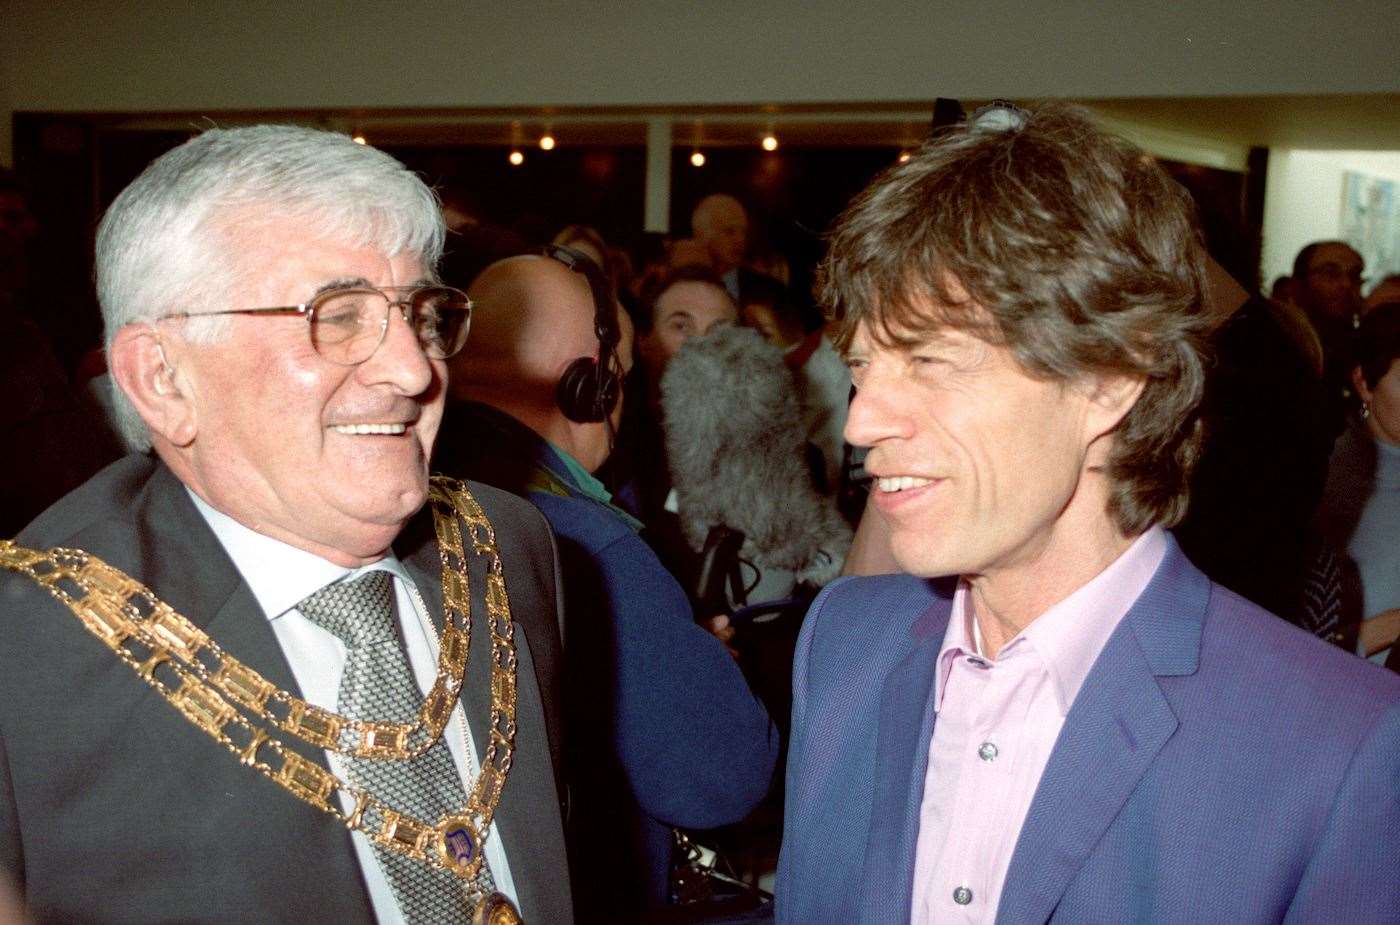 Former Mayor Of Dartford Ivor Jones pictured with Mick Jagger at the opening of his centre at Dartford Grammar.